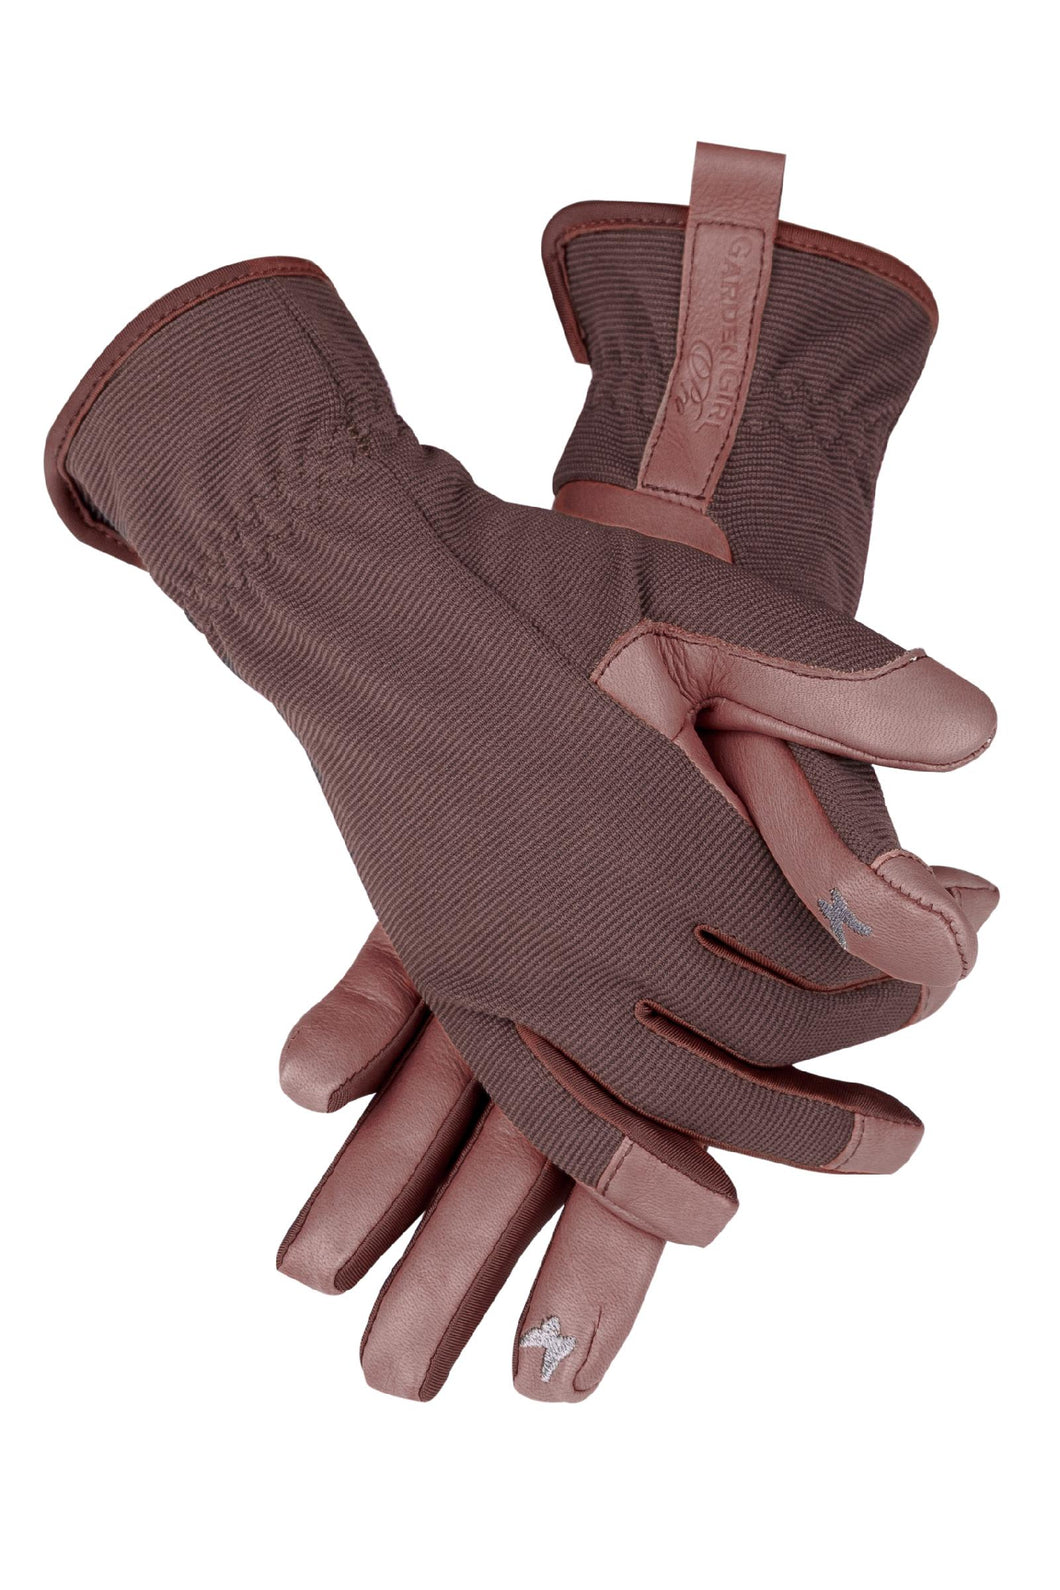 Garden Girl Premium Leather Pro Gloves